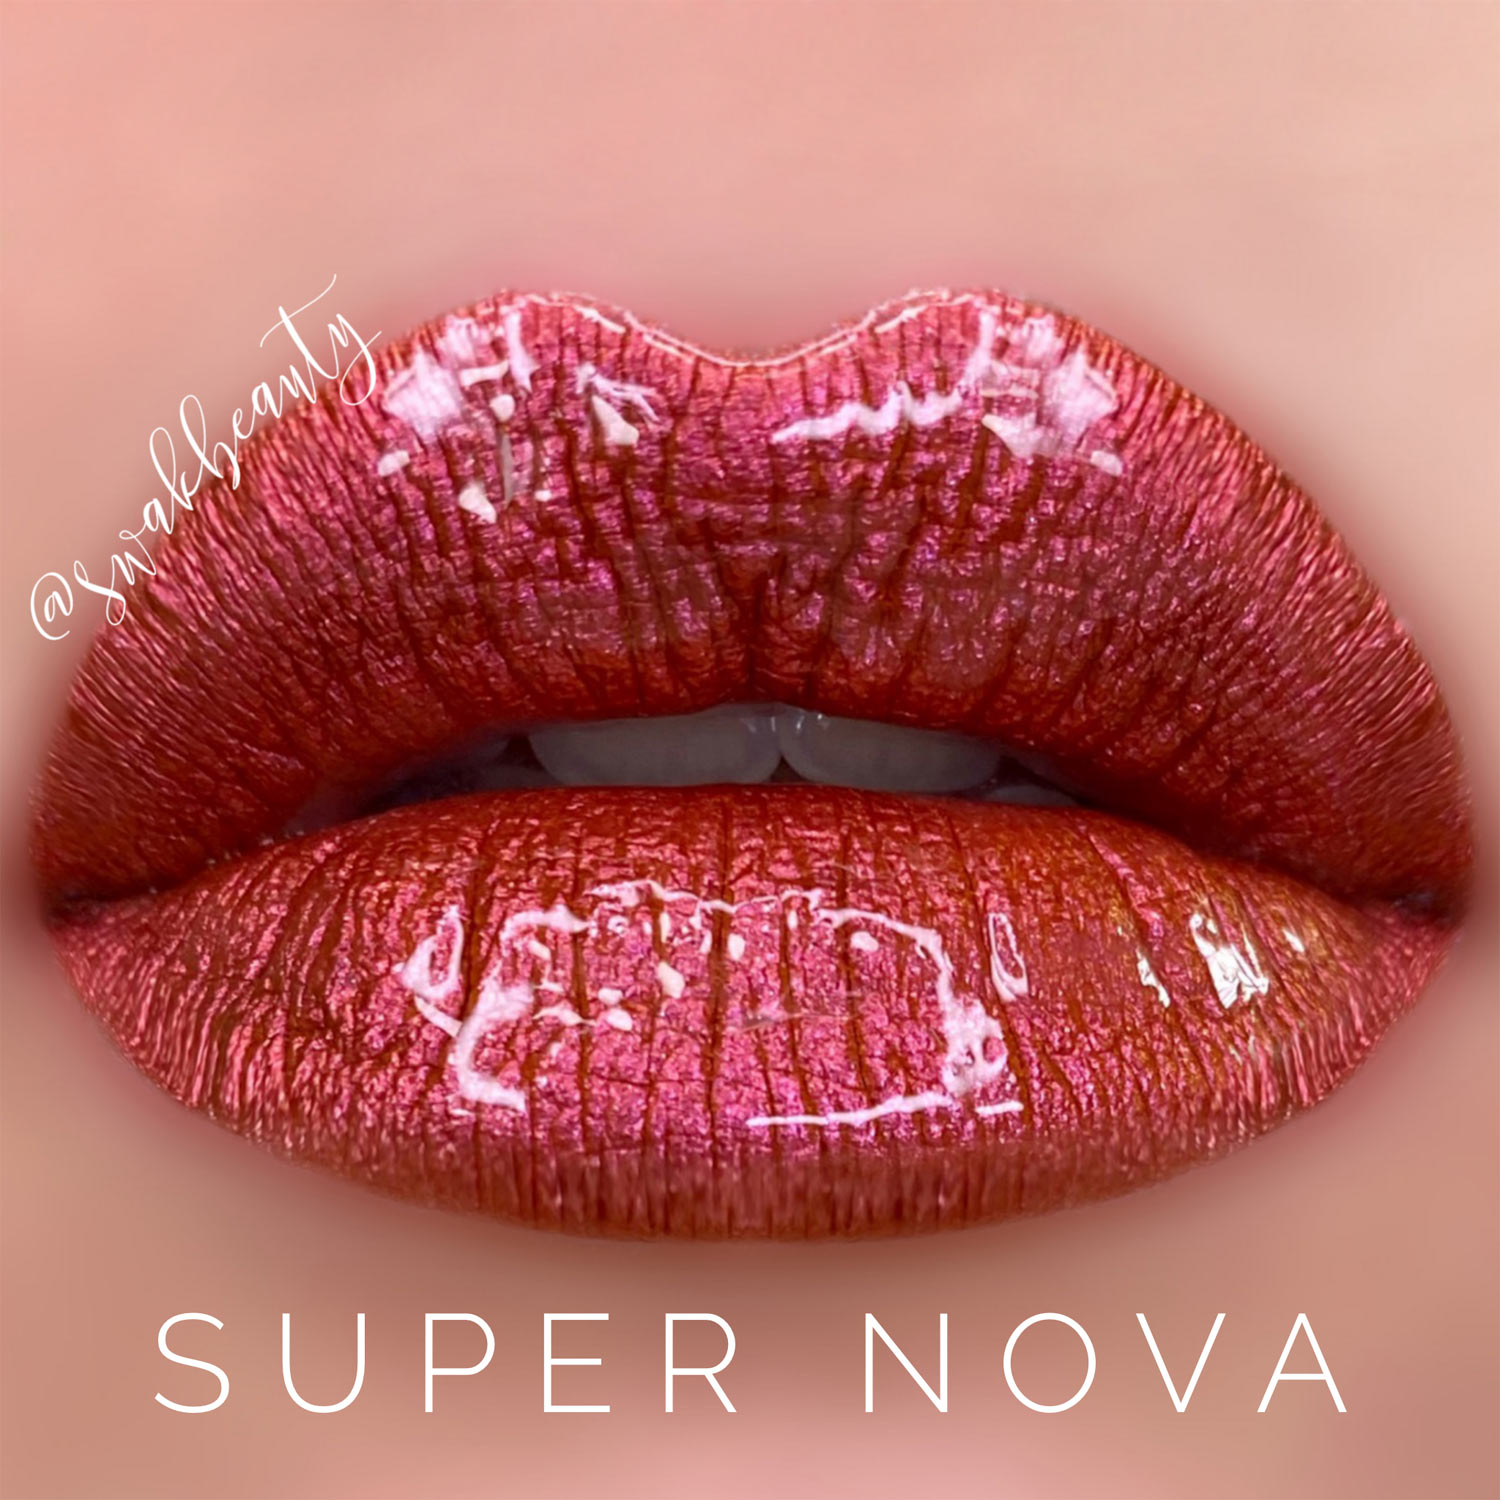 Super Nova Lipsense Limited Edition Swakbeauty Com